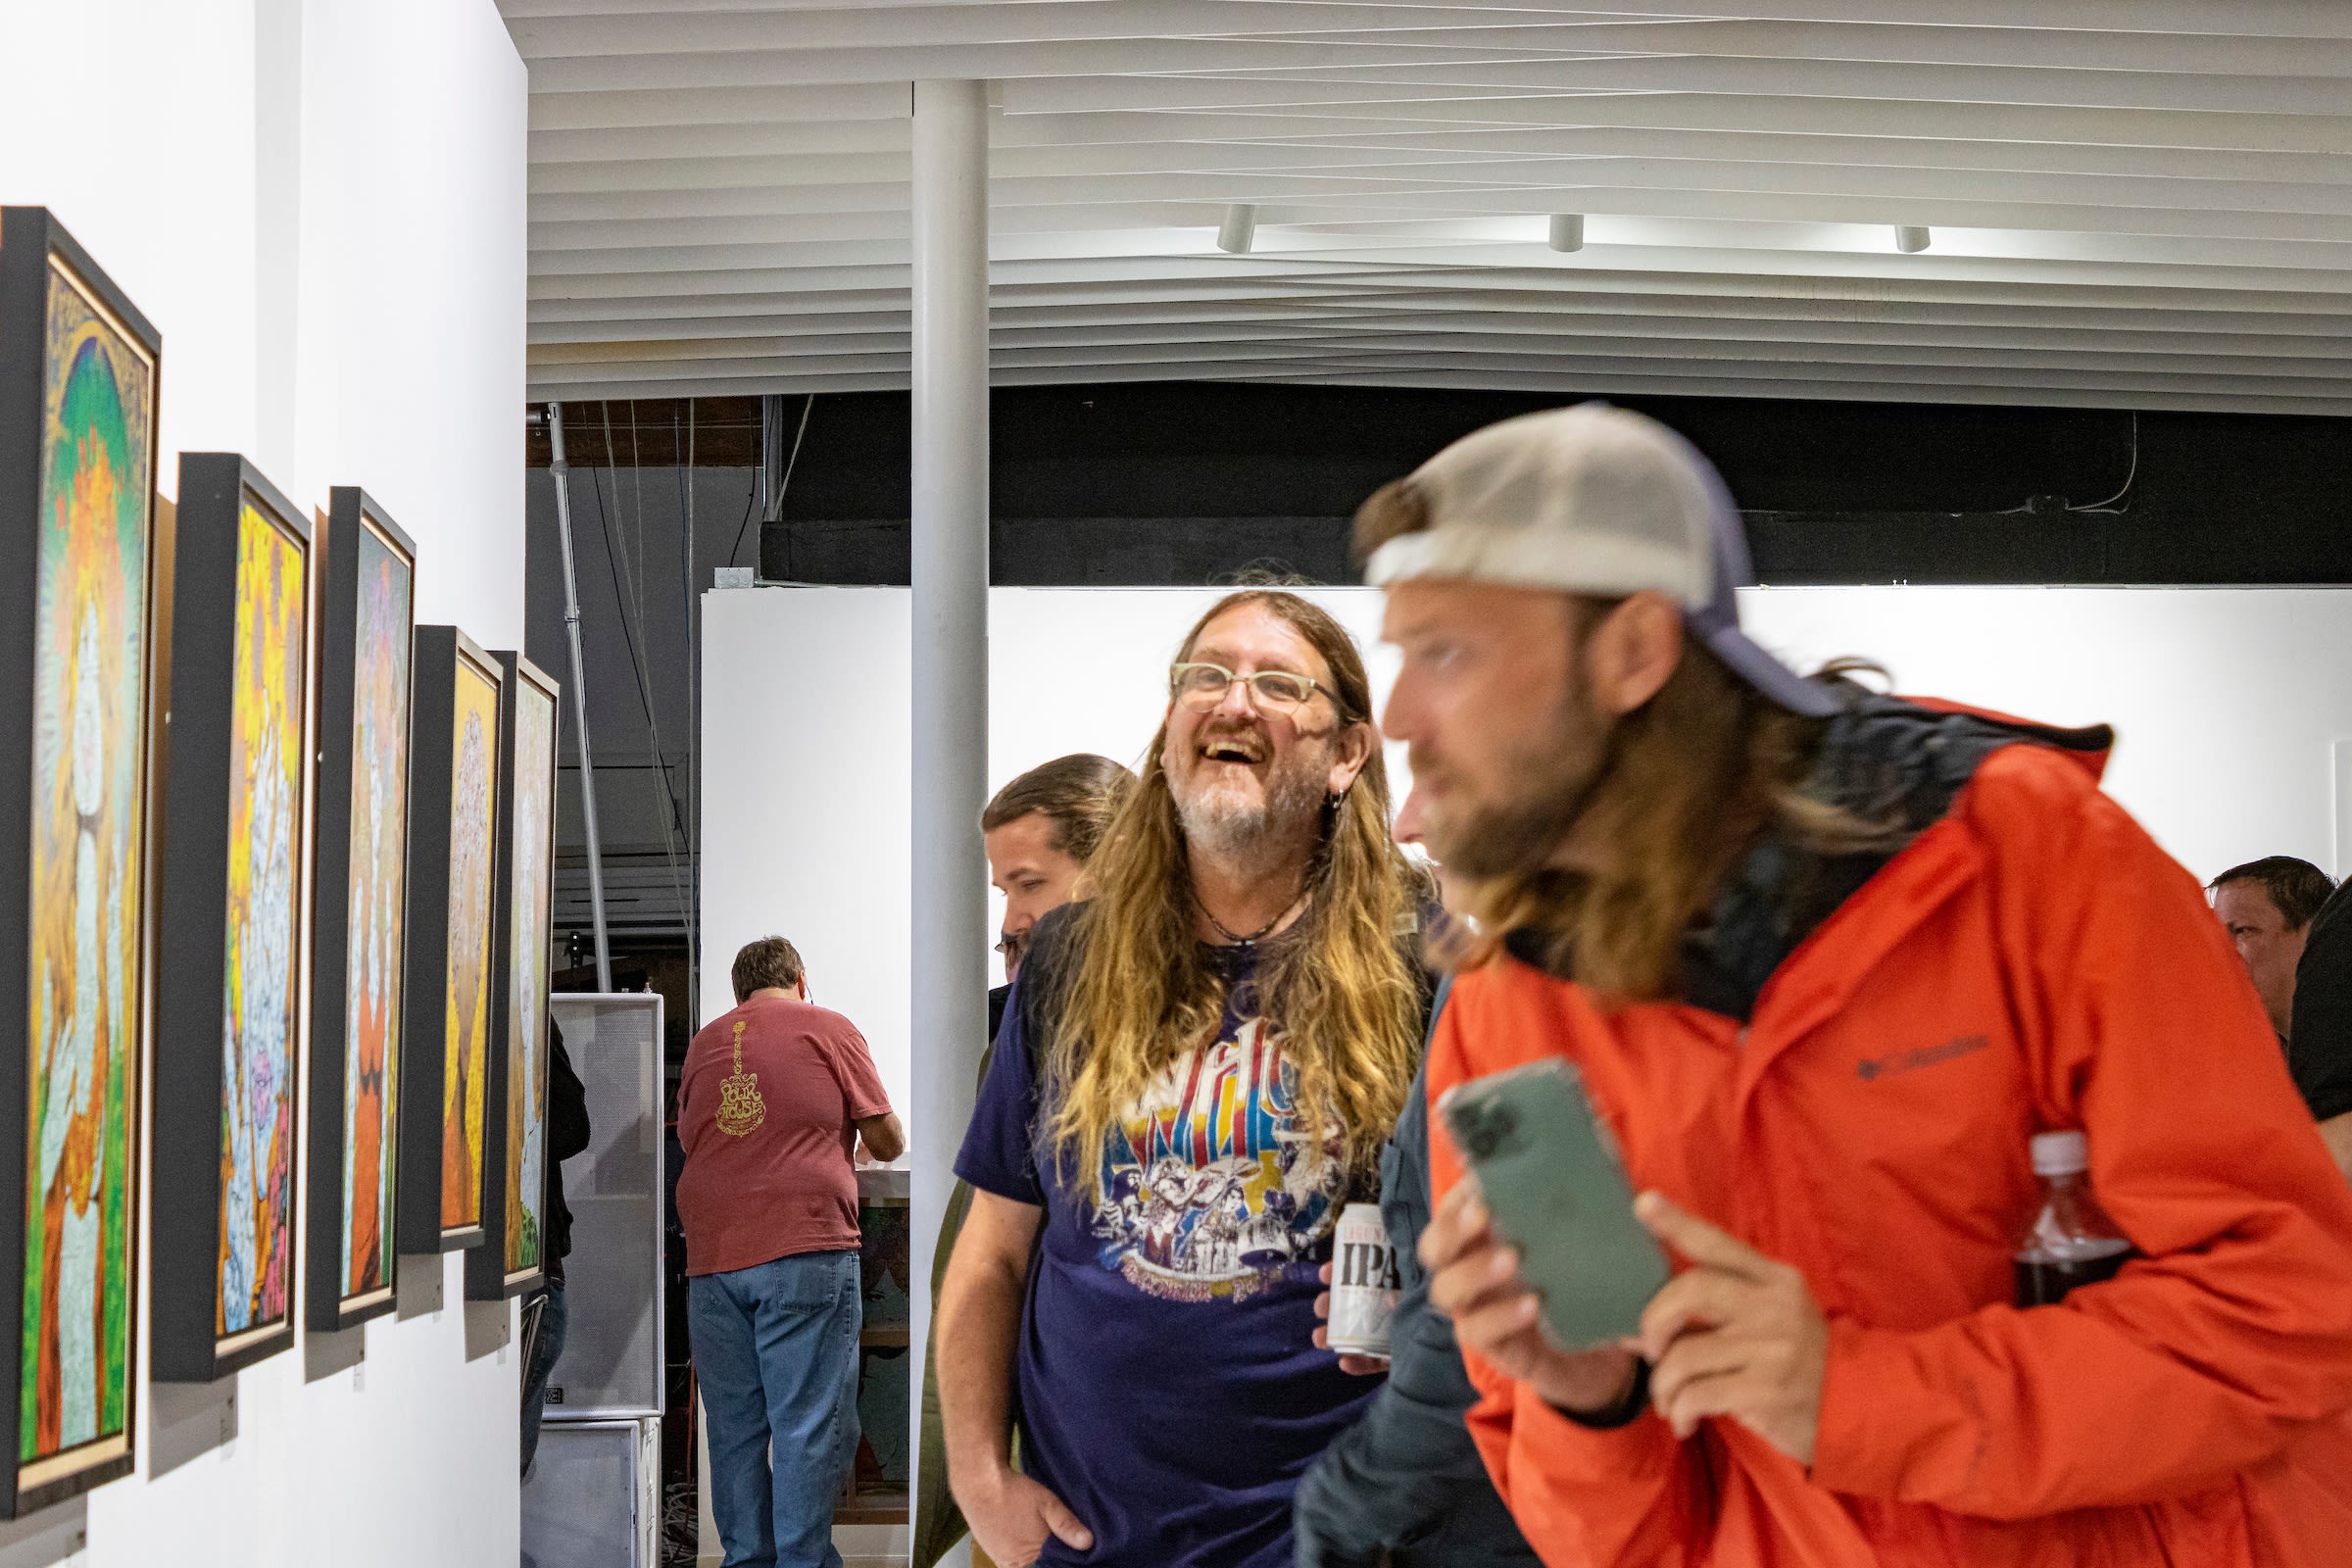 Photograph of a crowd admiring Chuck Sperry's artwork.